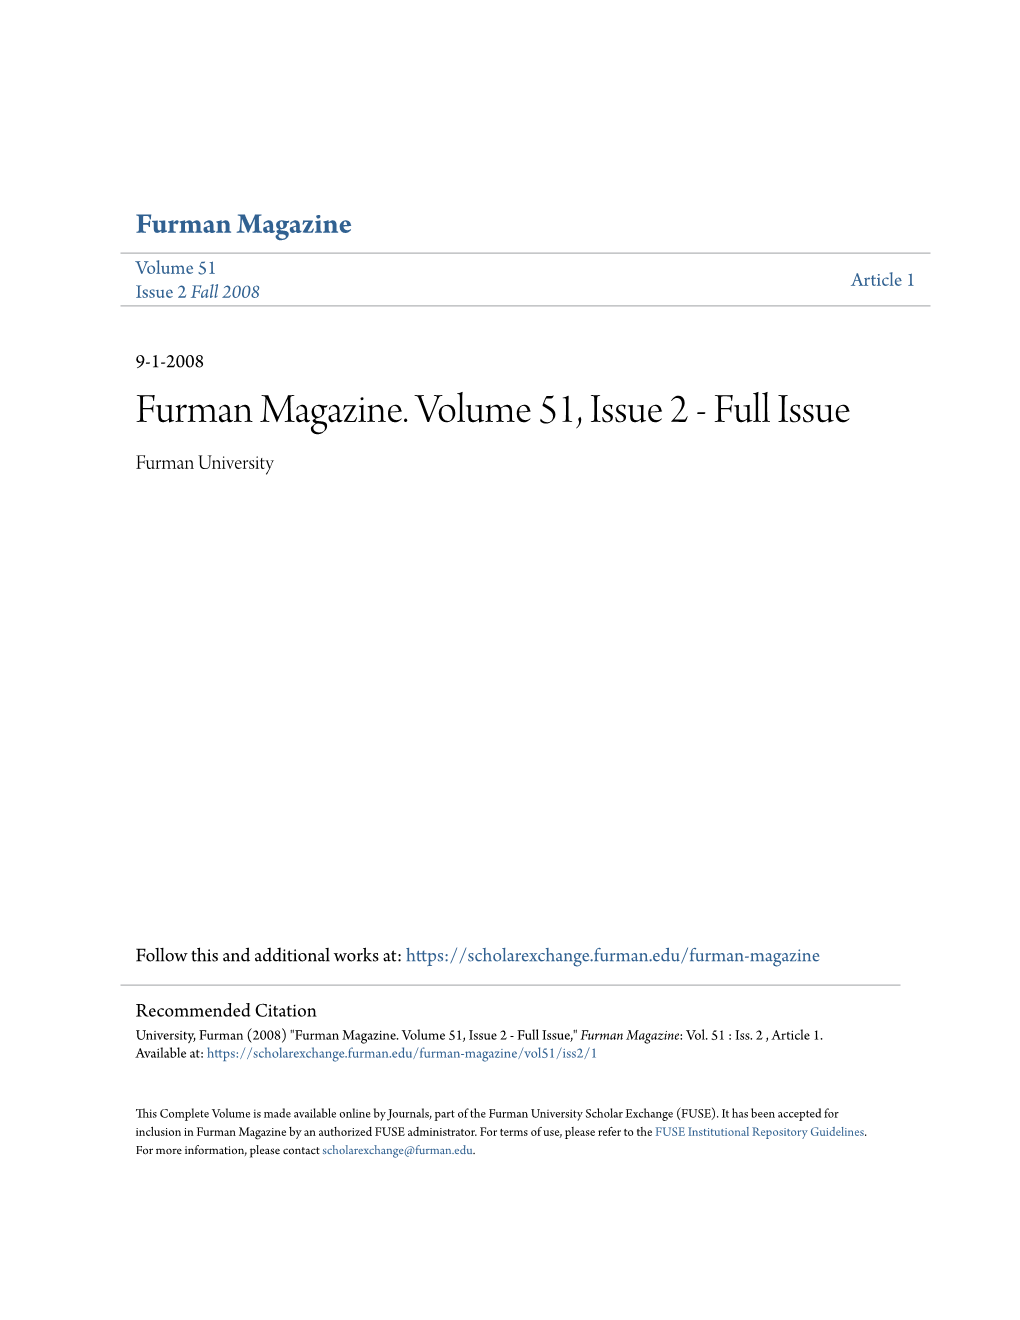 Furman Magazine. Volume 51, Issue 2 - Full Issue Furman University